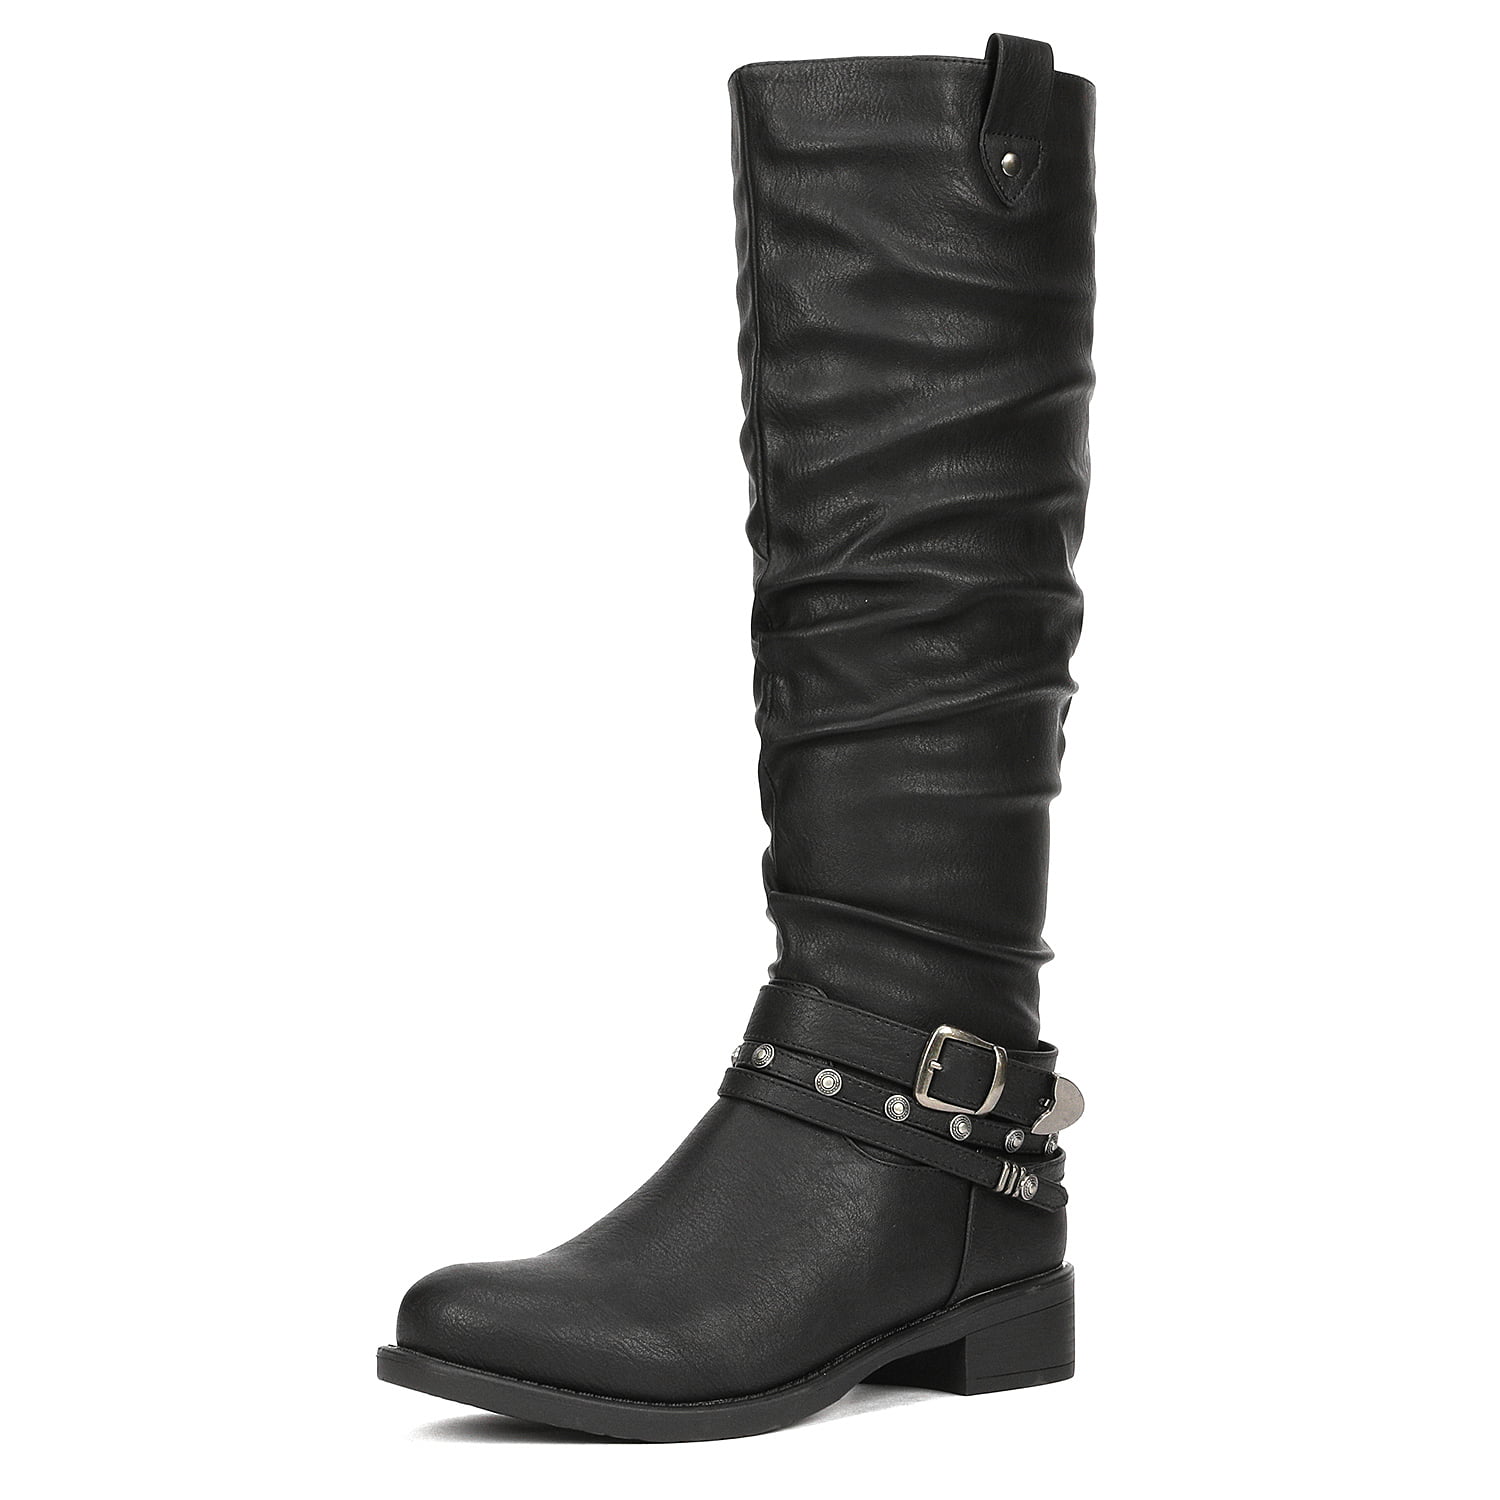 DREAM PAIRS Womens Side Zipper Fashion Knee High Riding Boots